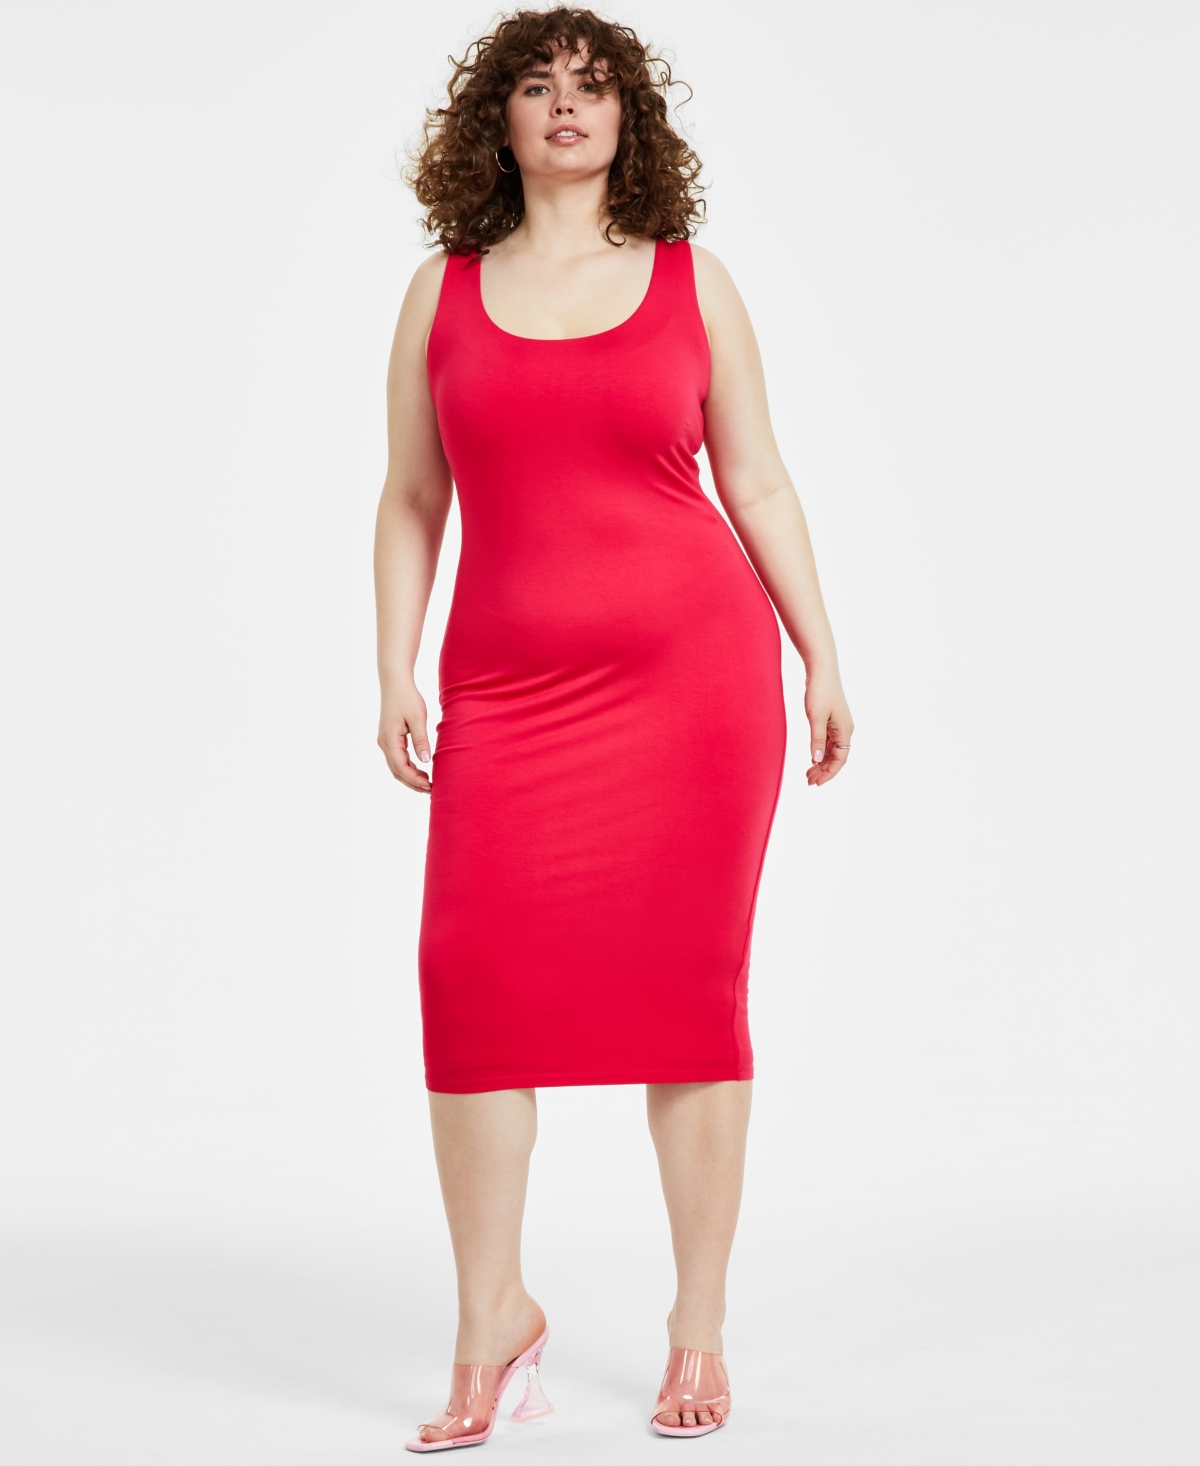 Bar Iii Trendy Plus Size Sleeveless Bodycon Midi Dress, Created For Macy's In Watermelon Pop